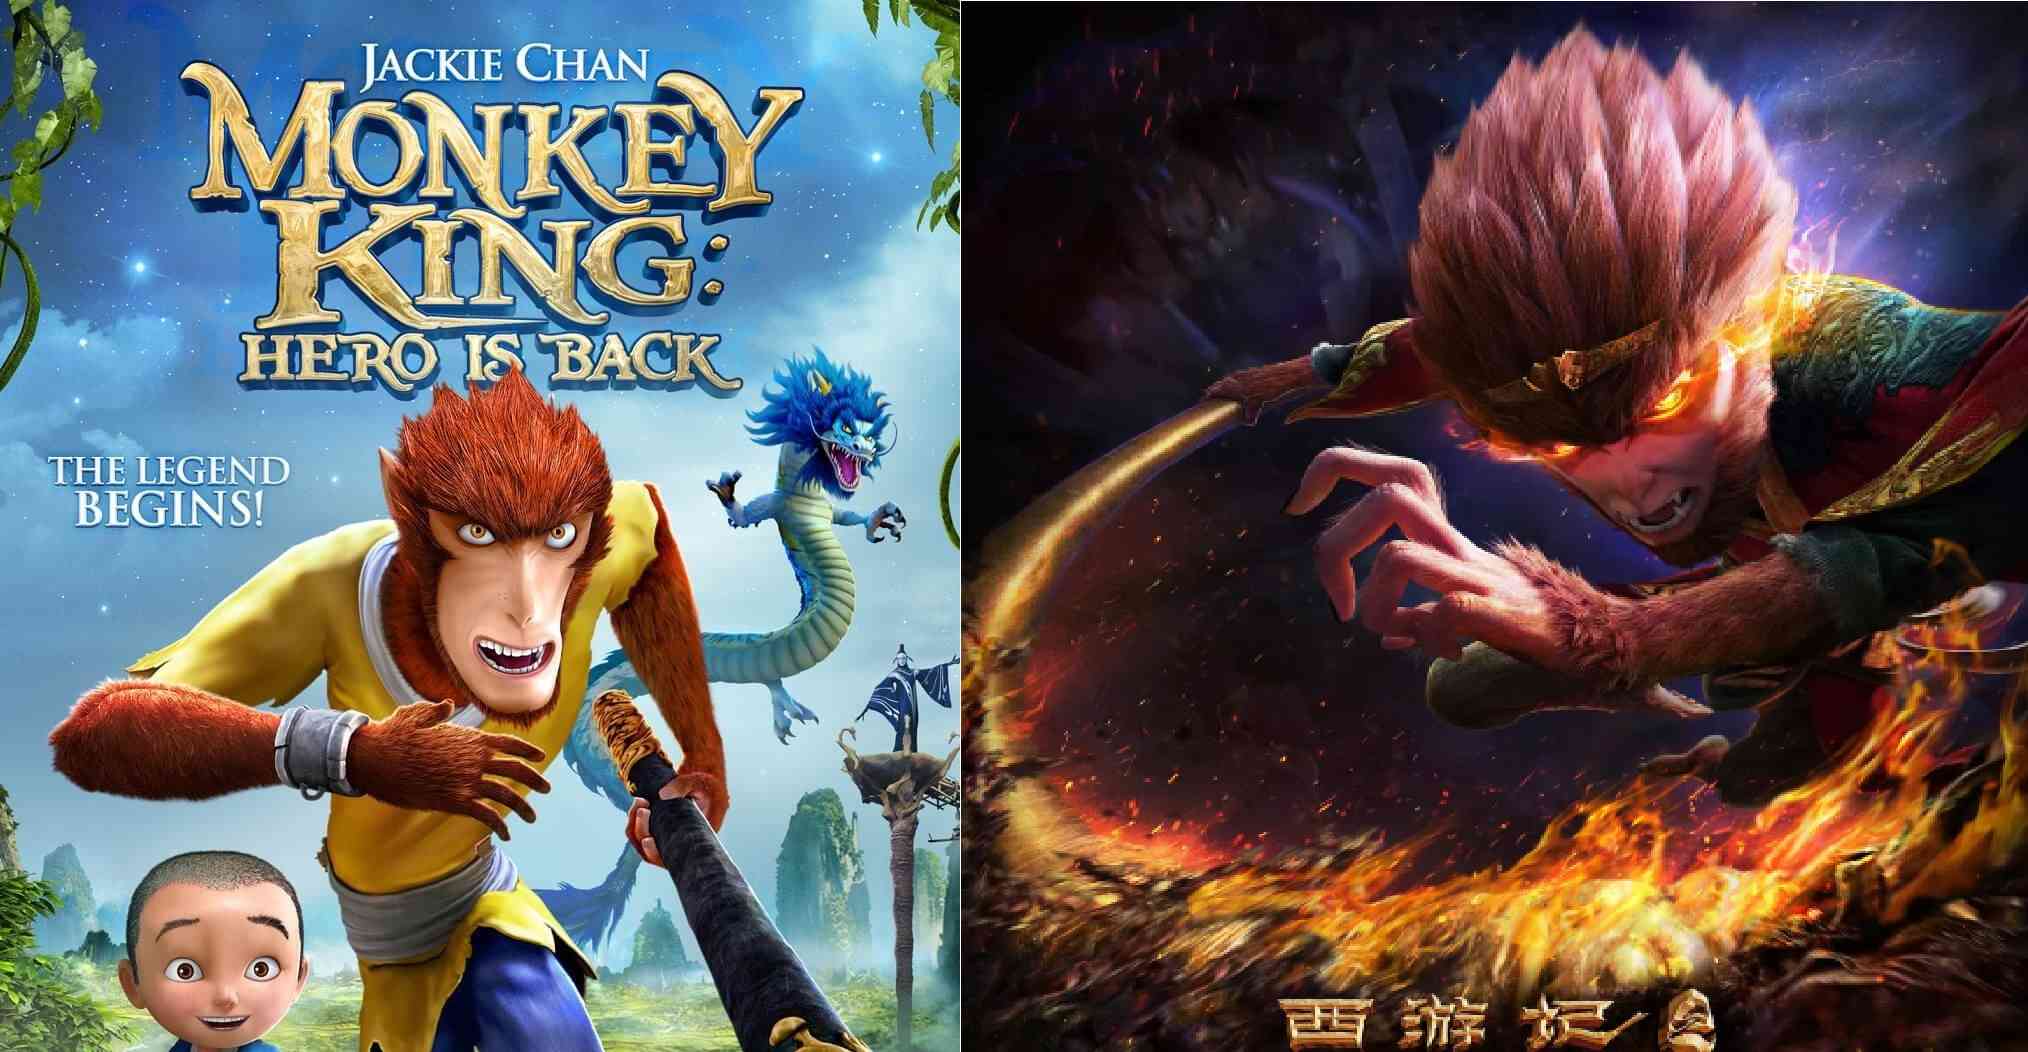 Negara Tiongkok merilis Trailer film animasi yang BUKAN sequel dari Monkey King: Hero Is Back